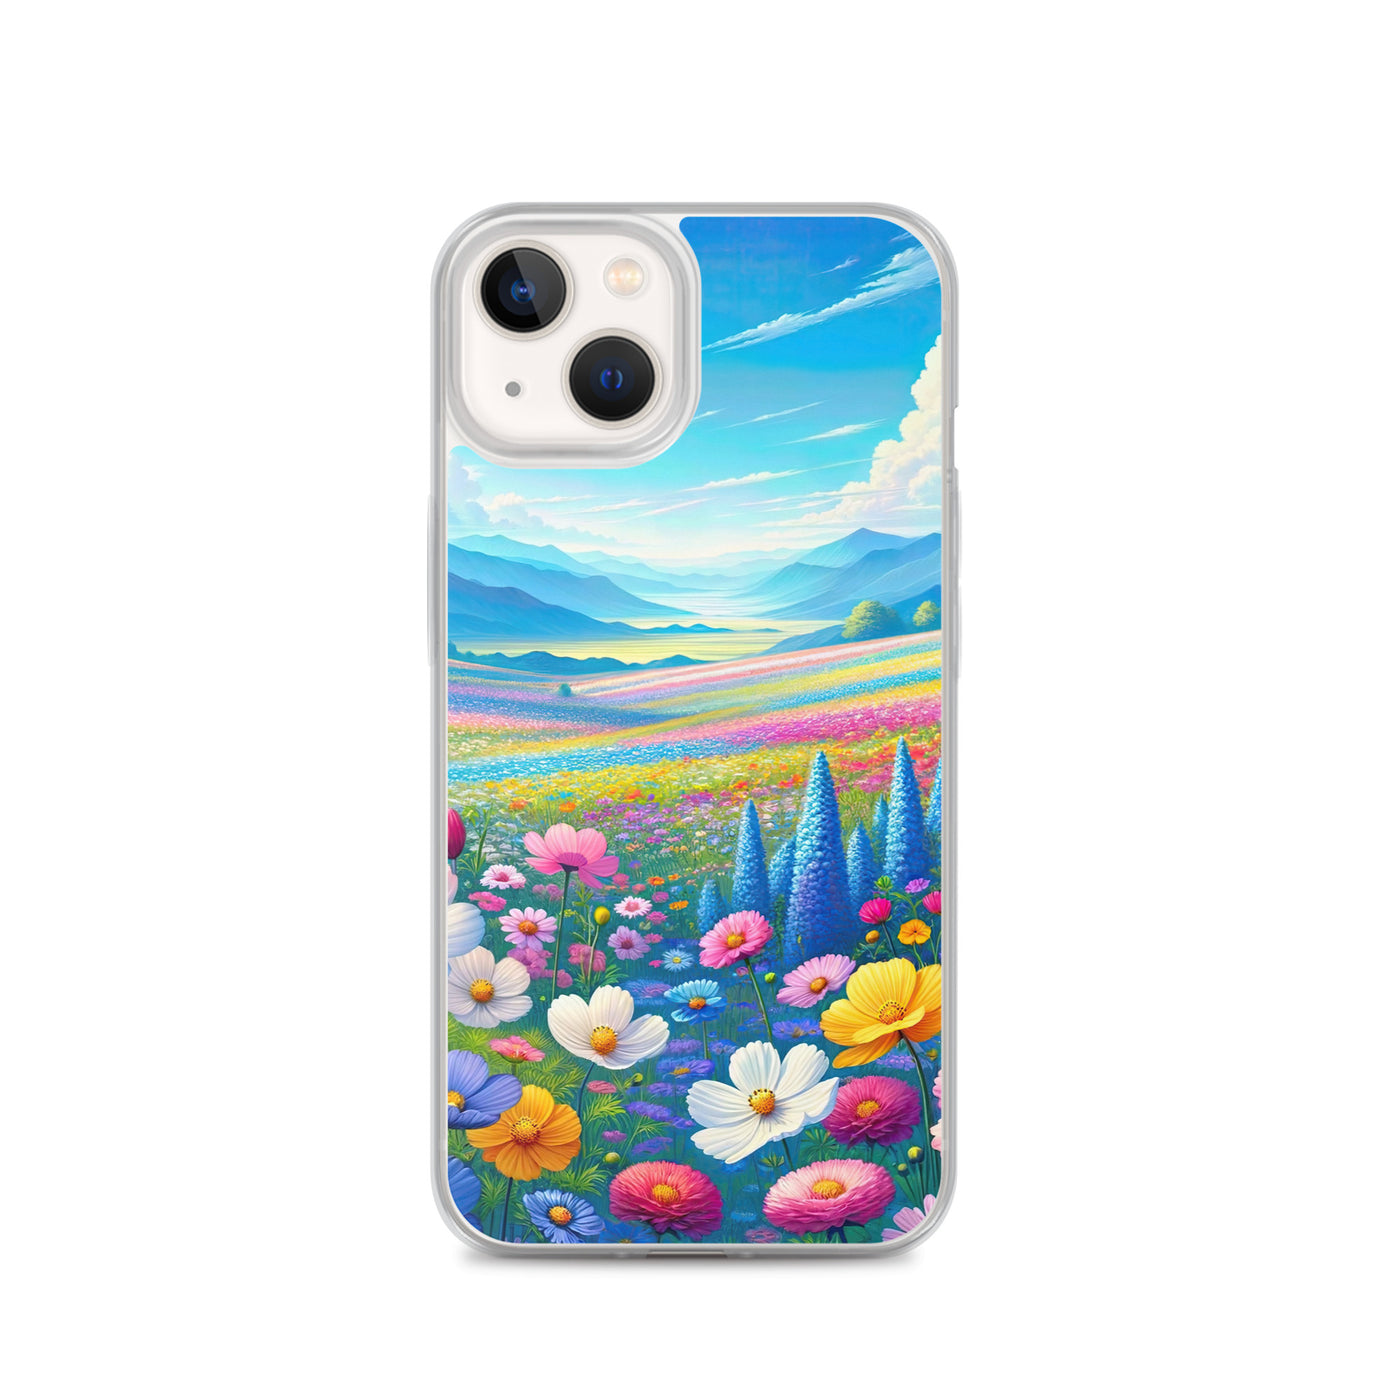 Weitläufiges Blumenfeld unter himmelblauem Himmel, leuchtende Flora - iPhone Schutzhülle (durchsichtig) camping xxx yyy zzz iPhone 13